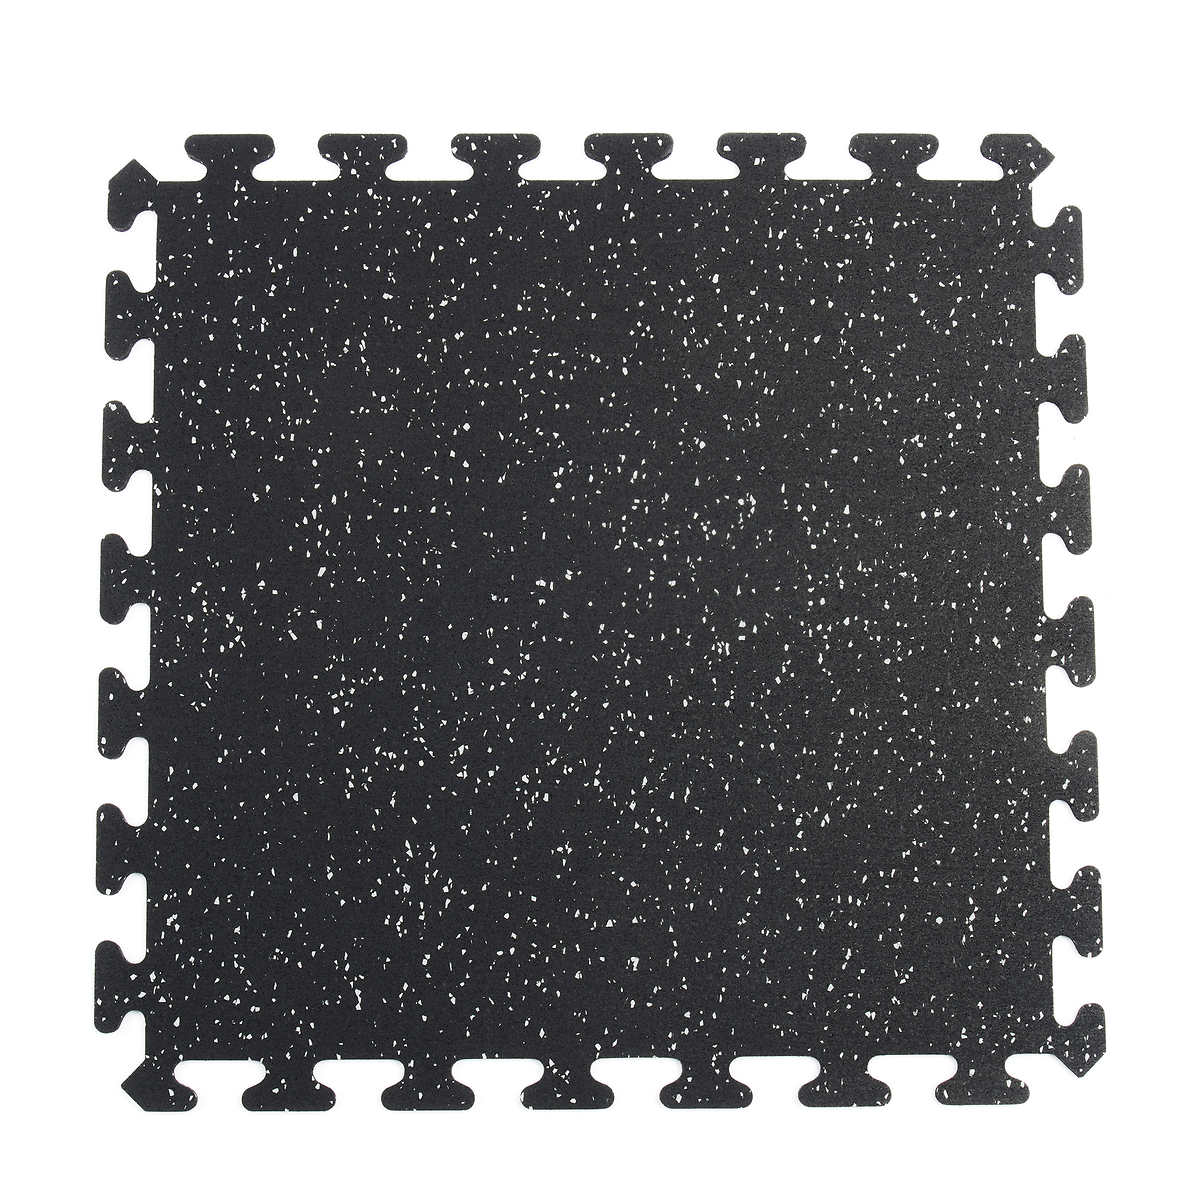 Details about   Modern Interlocking Black Heavy Duty Foam Gym Flooring Floor Mat Tiles 60x60cm 